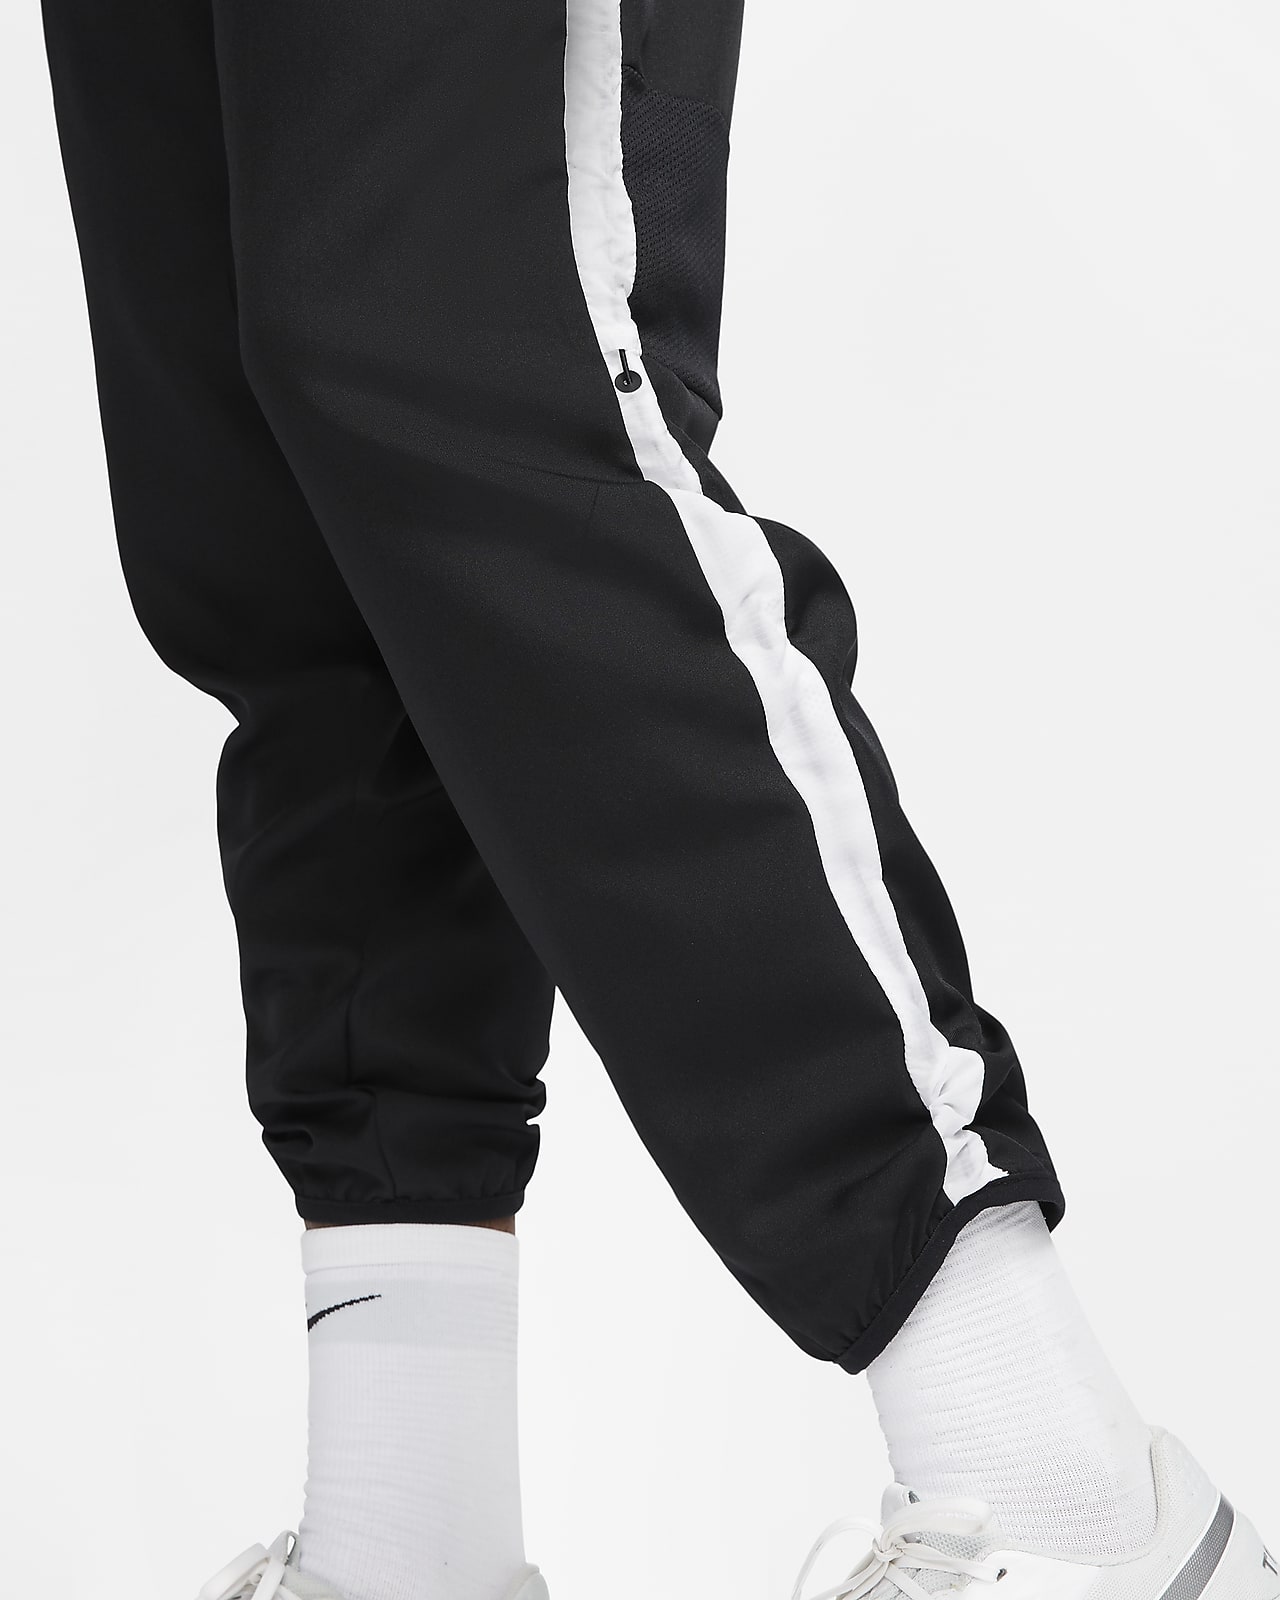 white and black nike pants